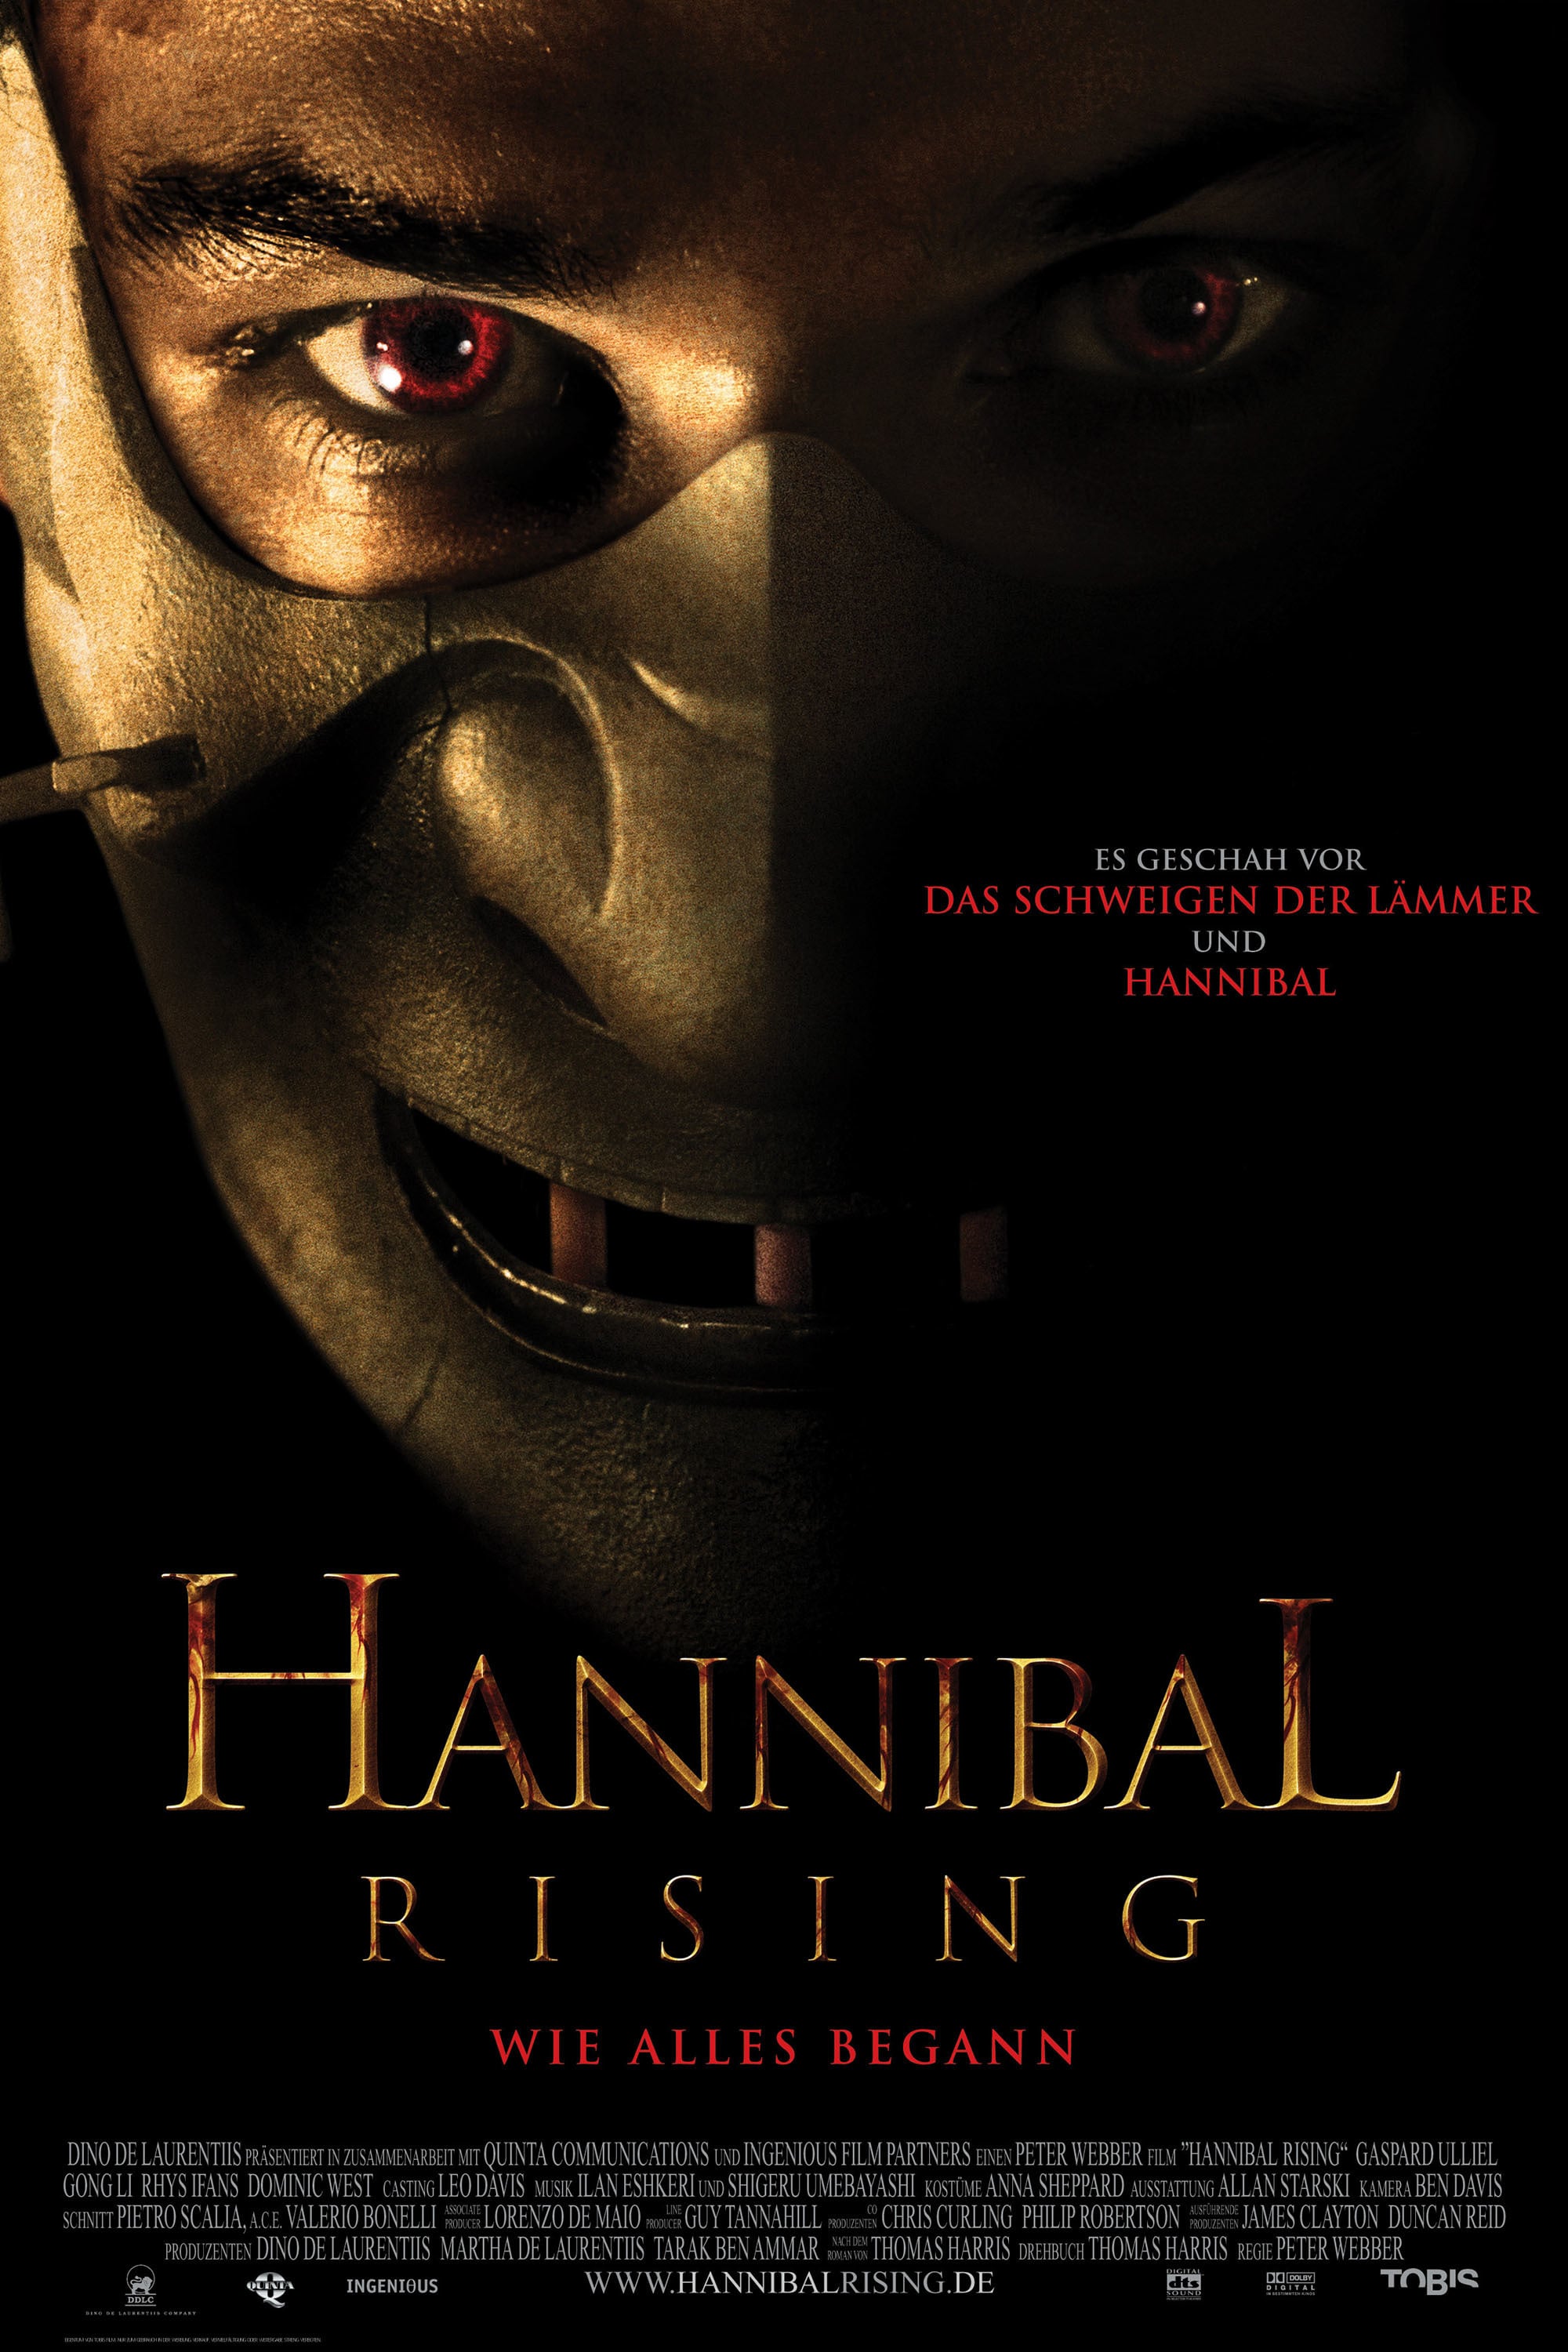 Plakat von "Hannibal Rising"